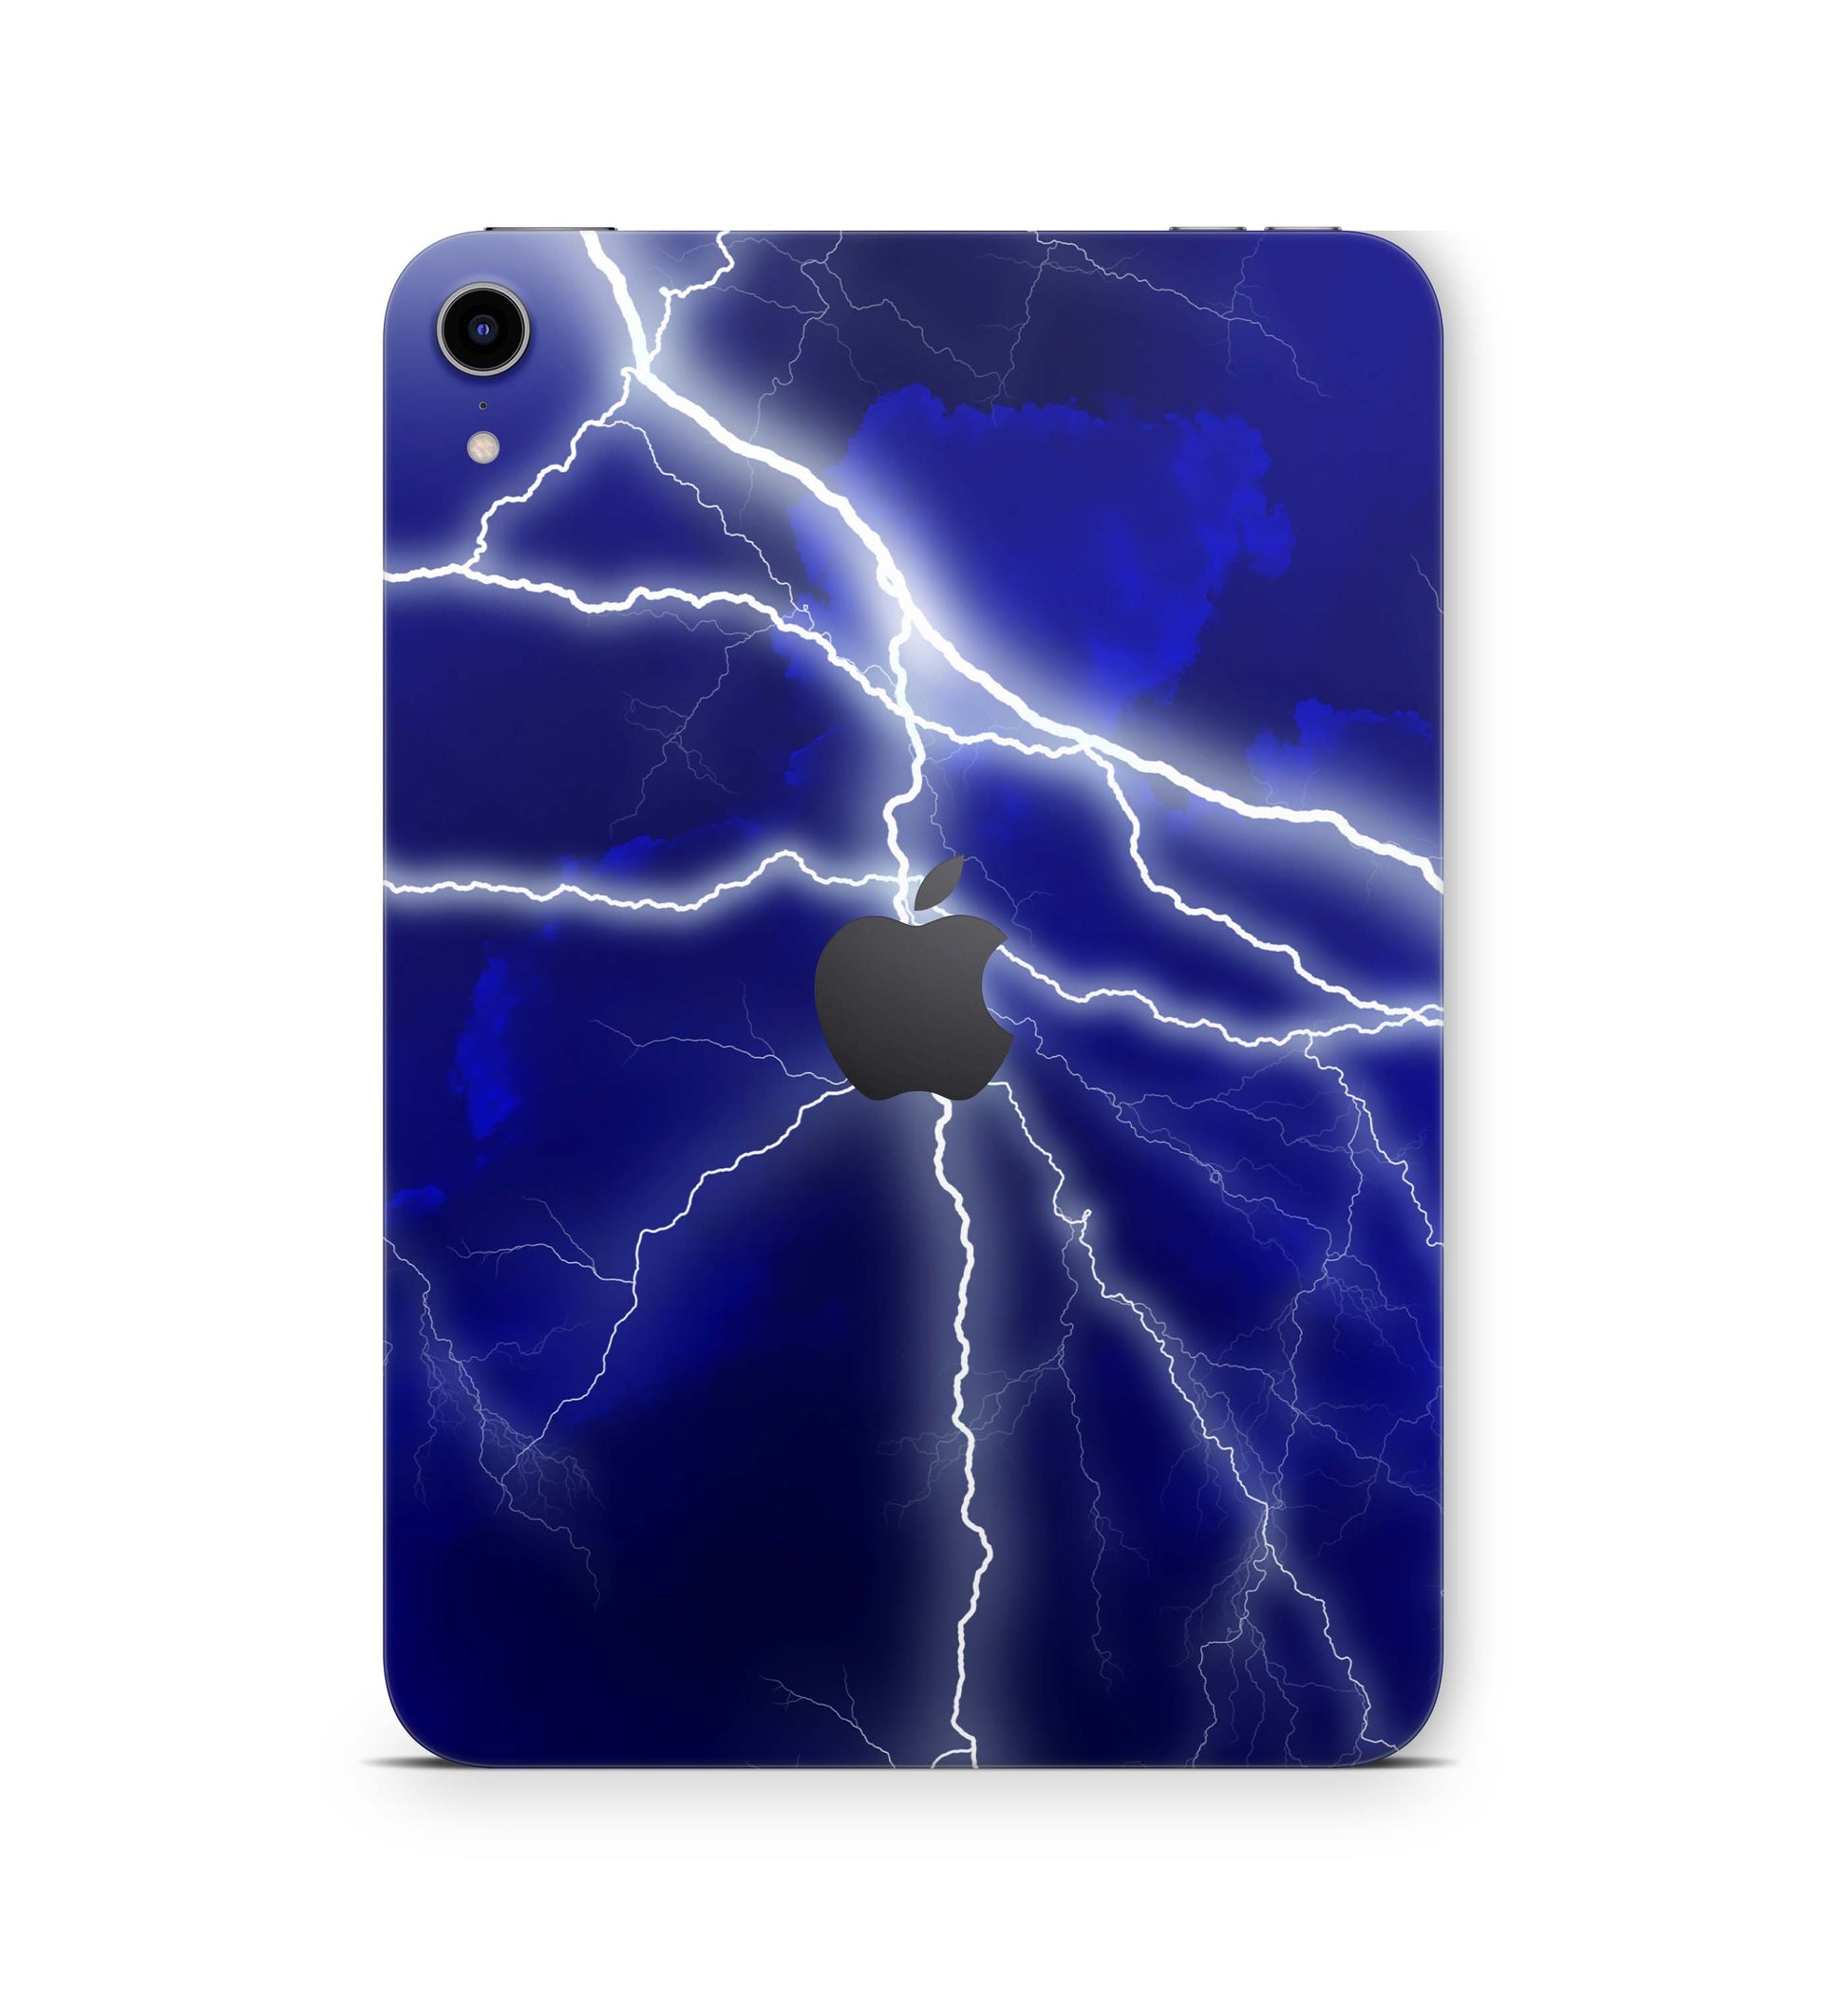 iPad Mini Skin Design Cover Folie Vinyl Skins & Wraps für alle iPad Mini Modelle Aufkleber Skins4u Apocalypse-blue  